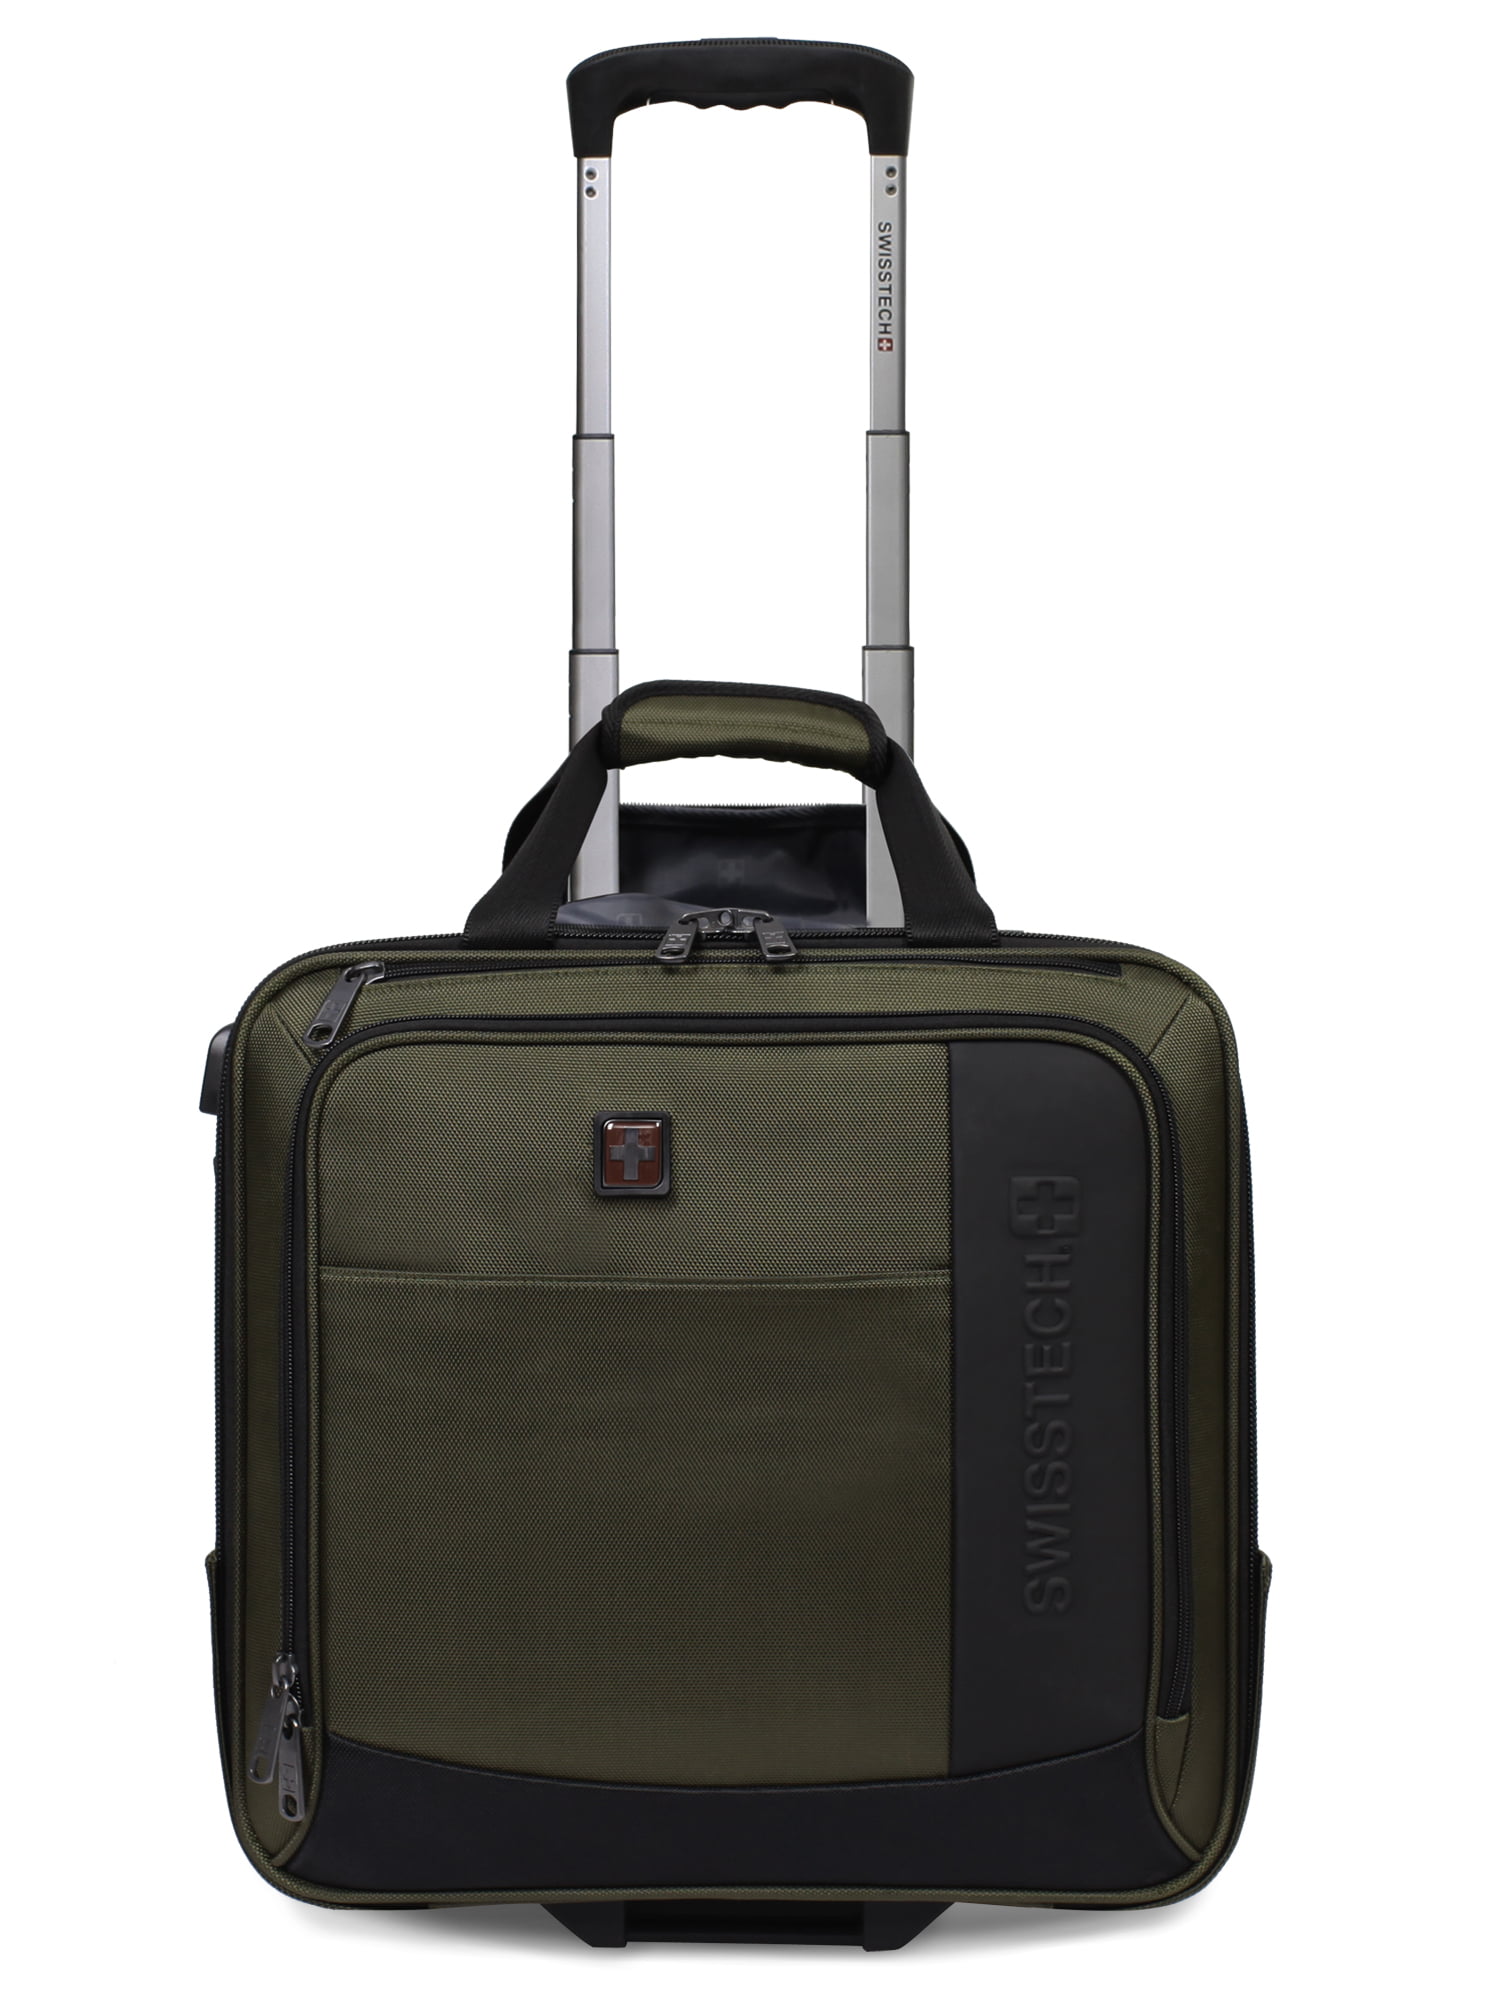 Swisstech Urban Trek 28 Check Soft Side Luggage, Olive (Walmart Exclusive)